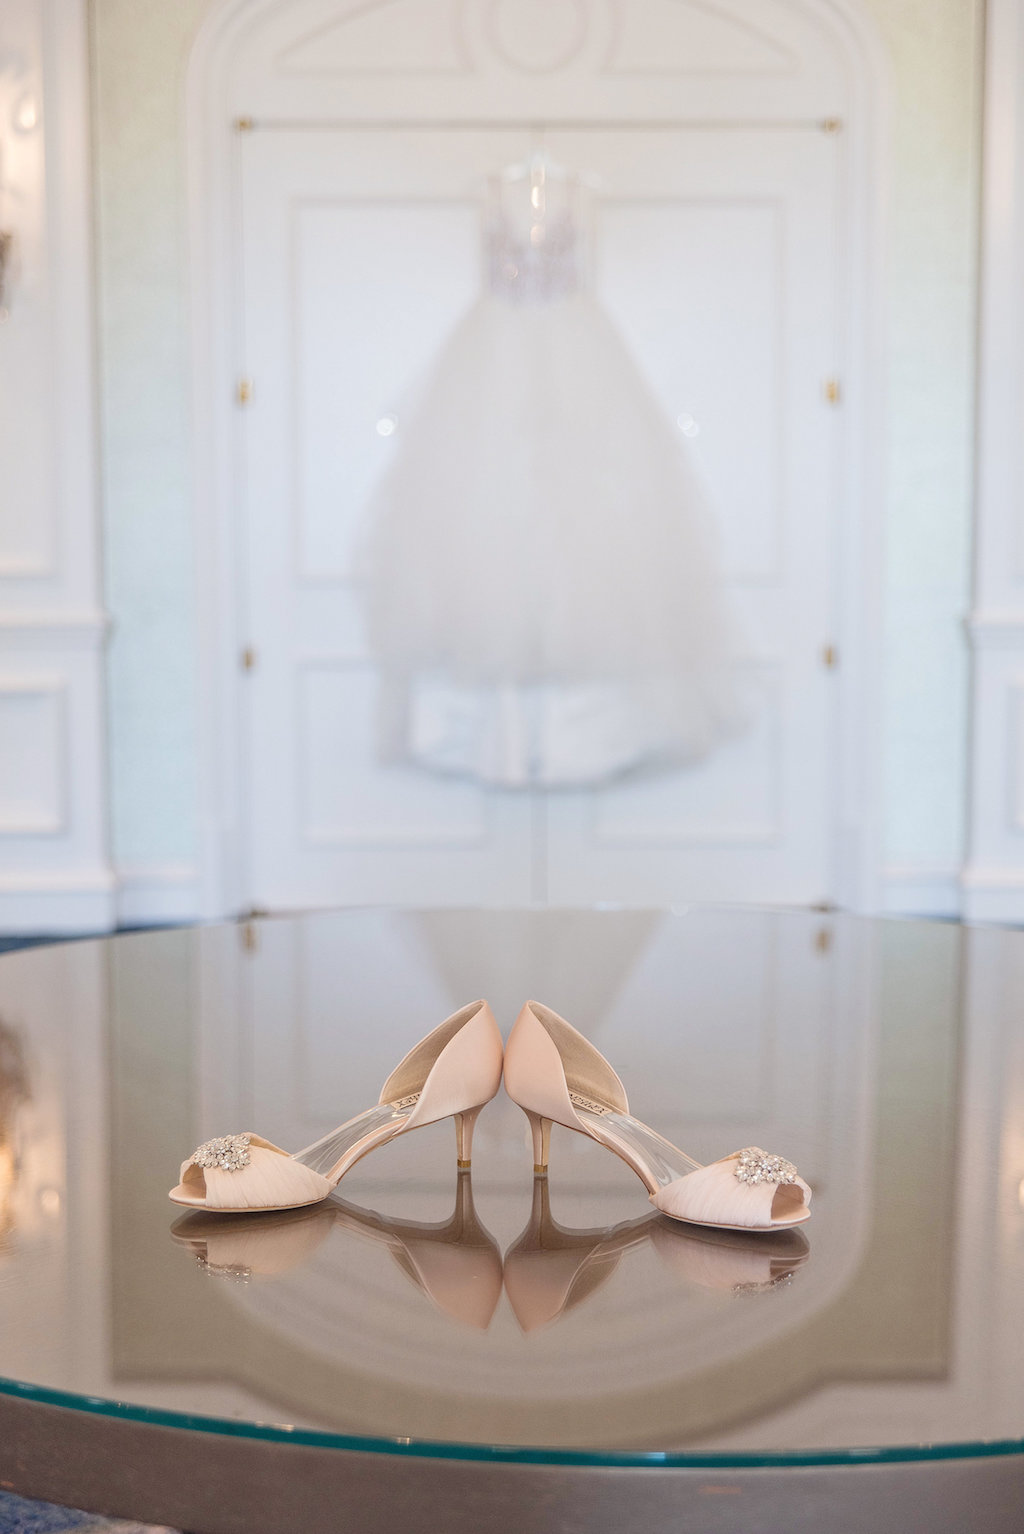 Peep Toe Blush Pink Wedding Shoes with Rhinestone, Hayley Paige Ballgown Dress on Hanger